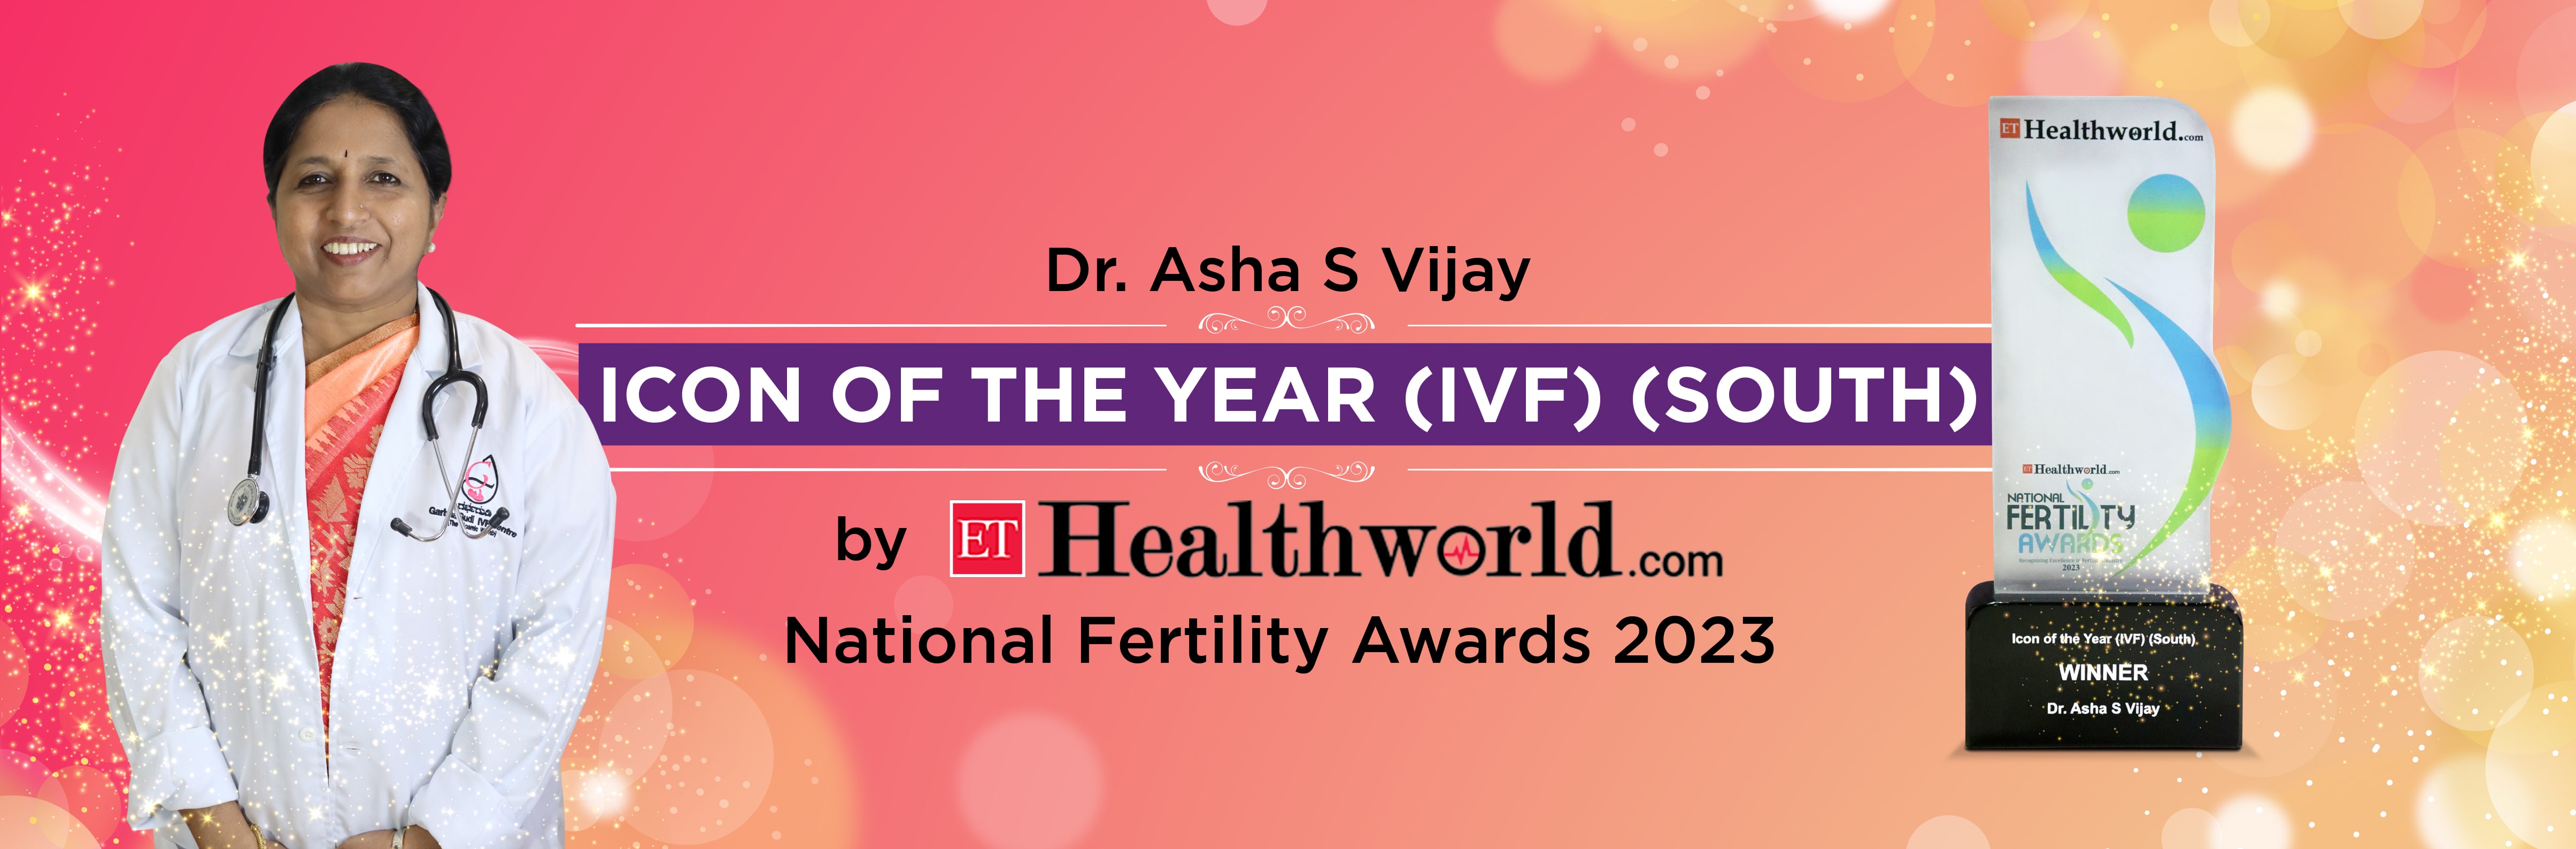 ICON of the Year - IVF - Dr Asha S Vijay